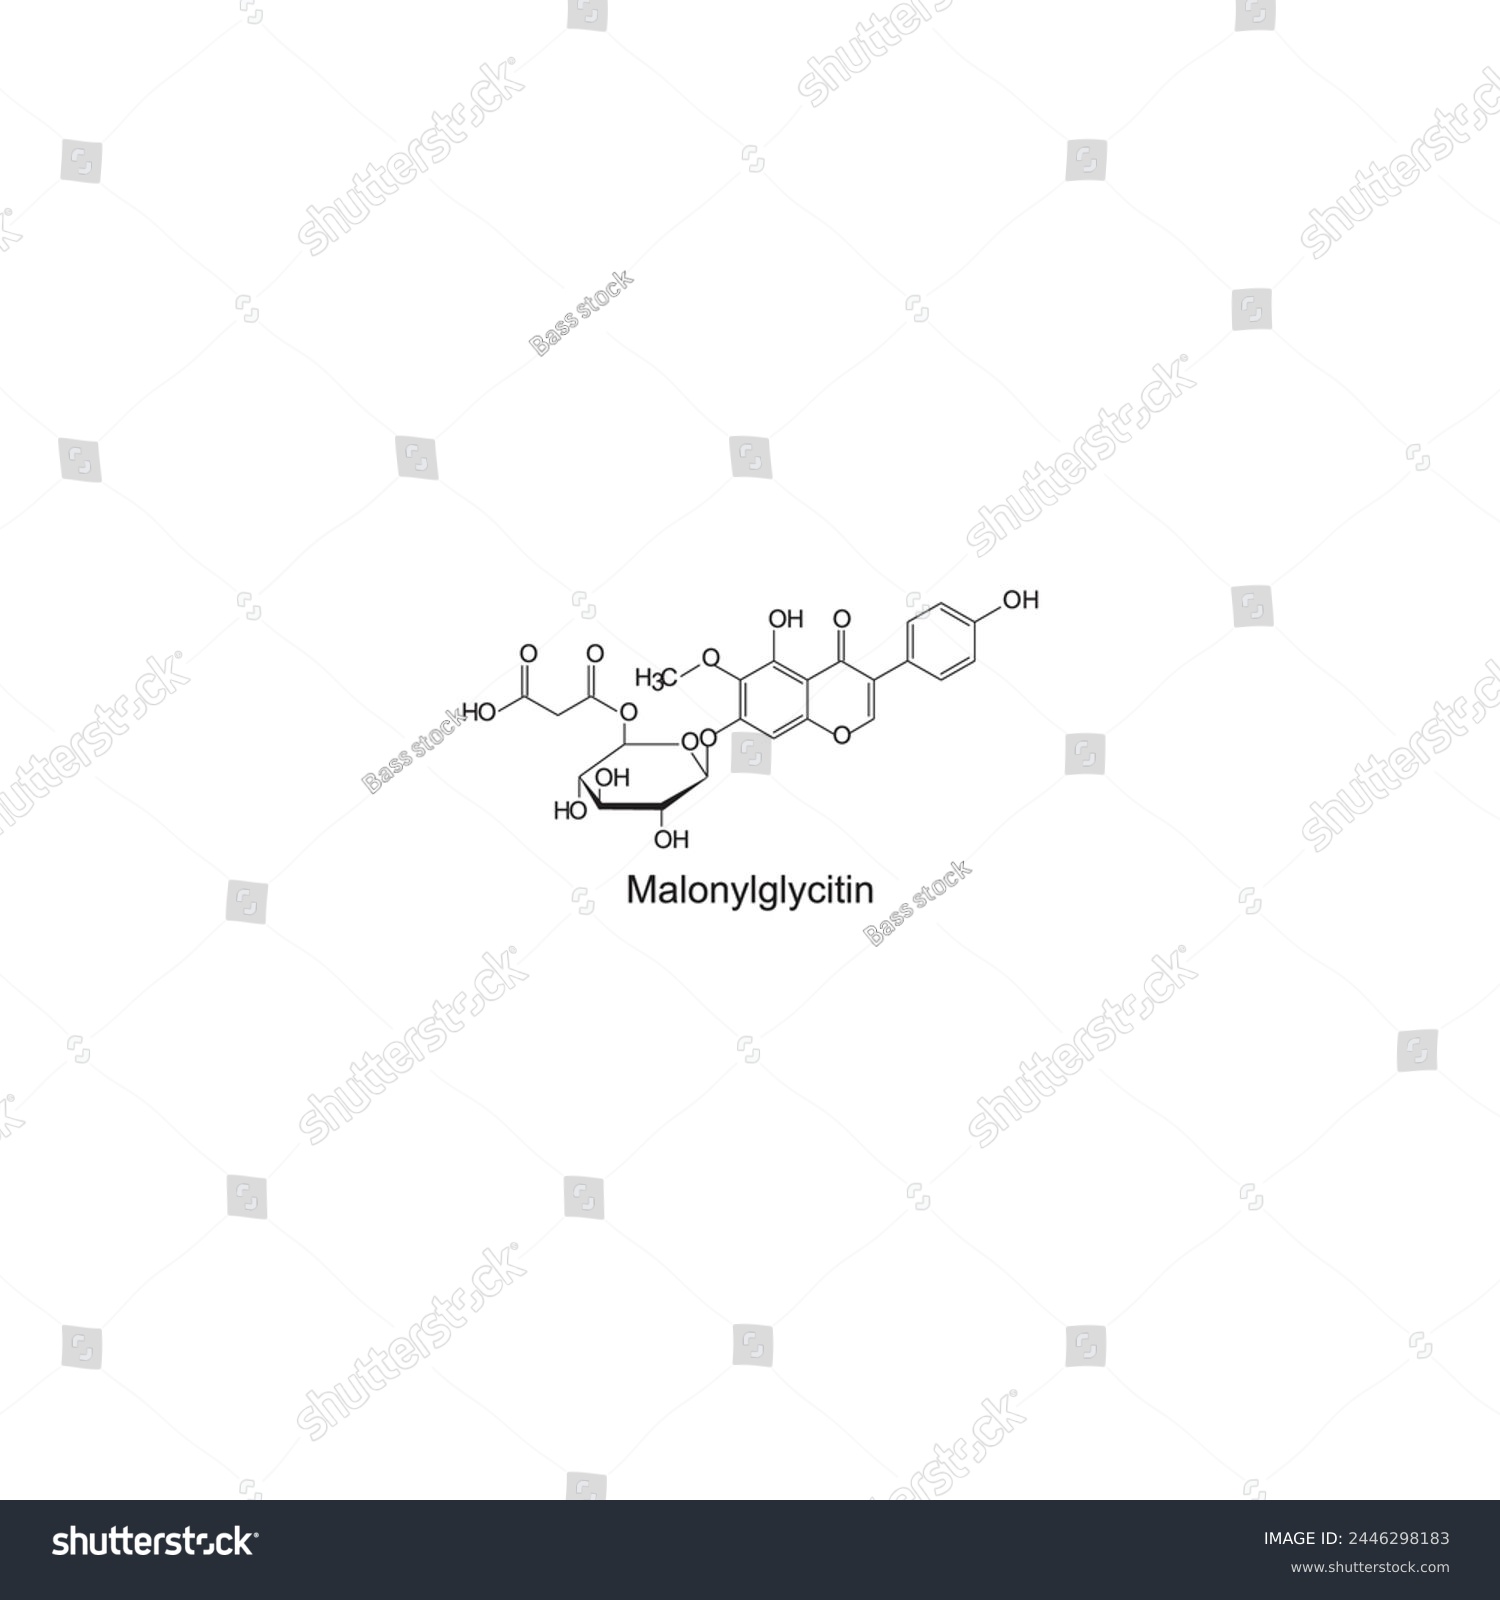 SVG of Malonylglycitin skeletal structure diagram. compound molecule scientific illustration on white background. svg